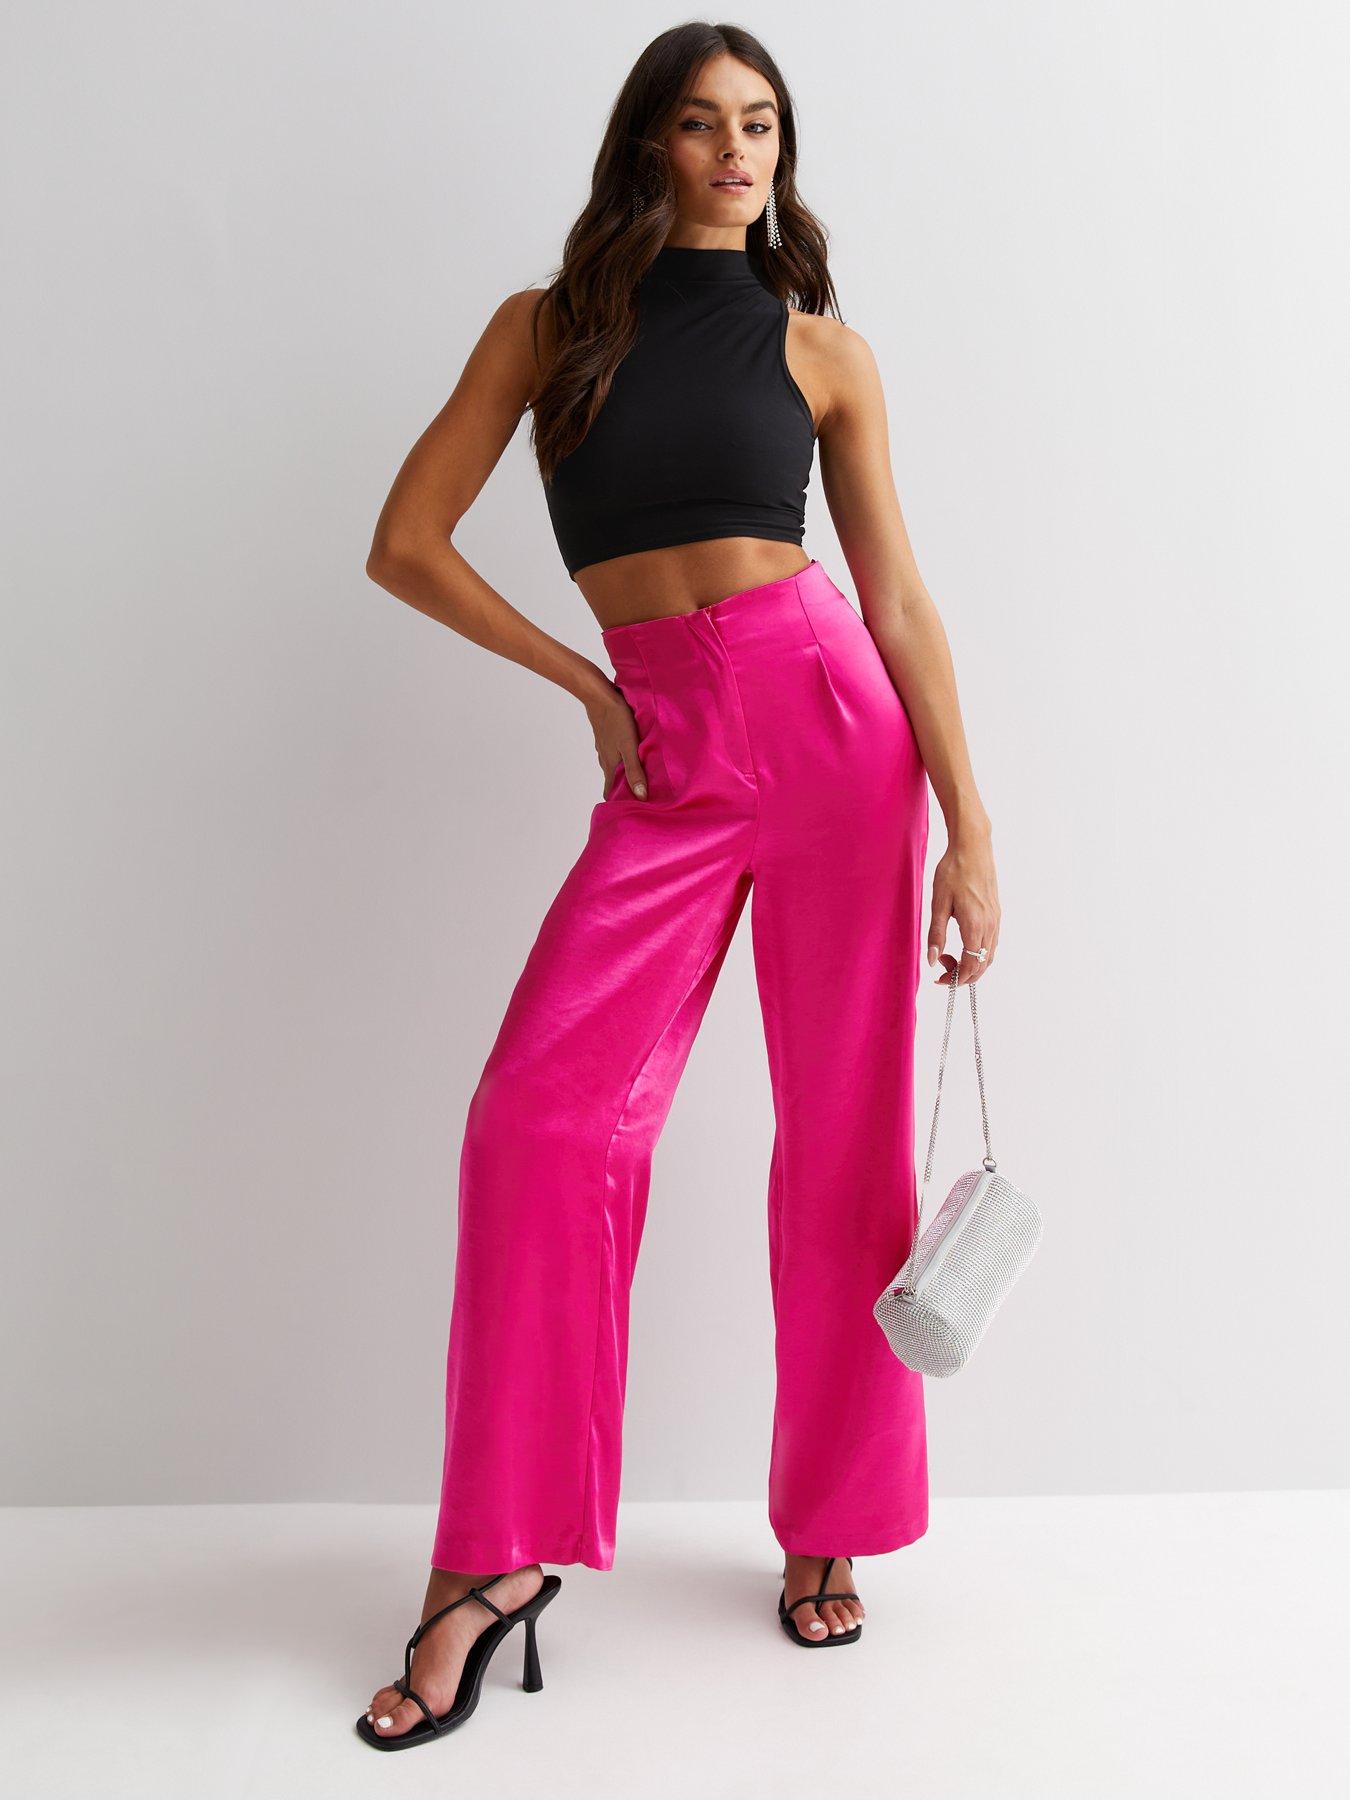 XS Greyish pink FP movement leggings - Depop